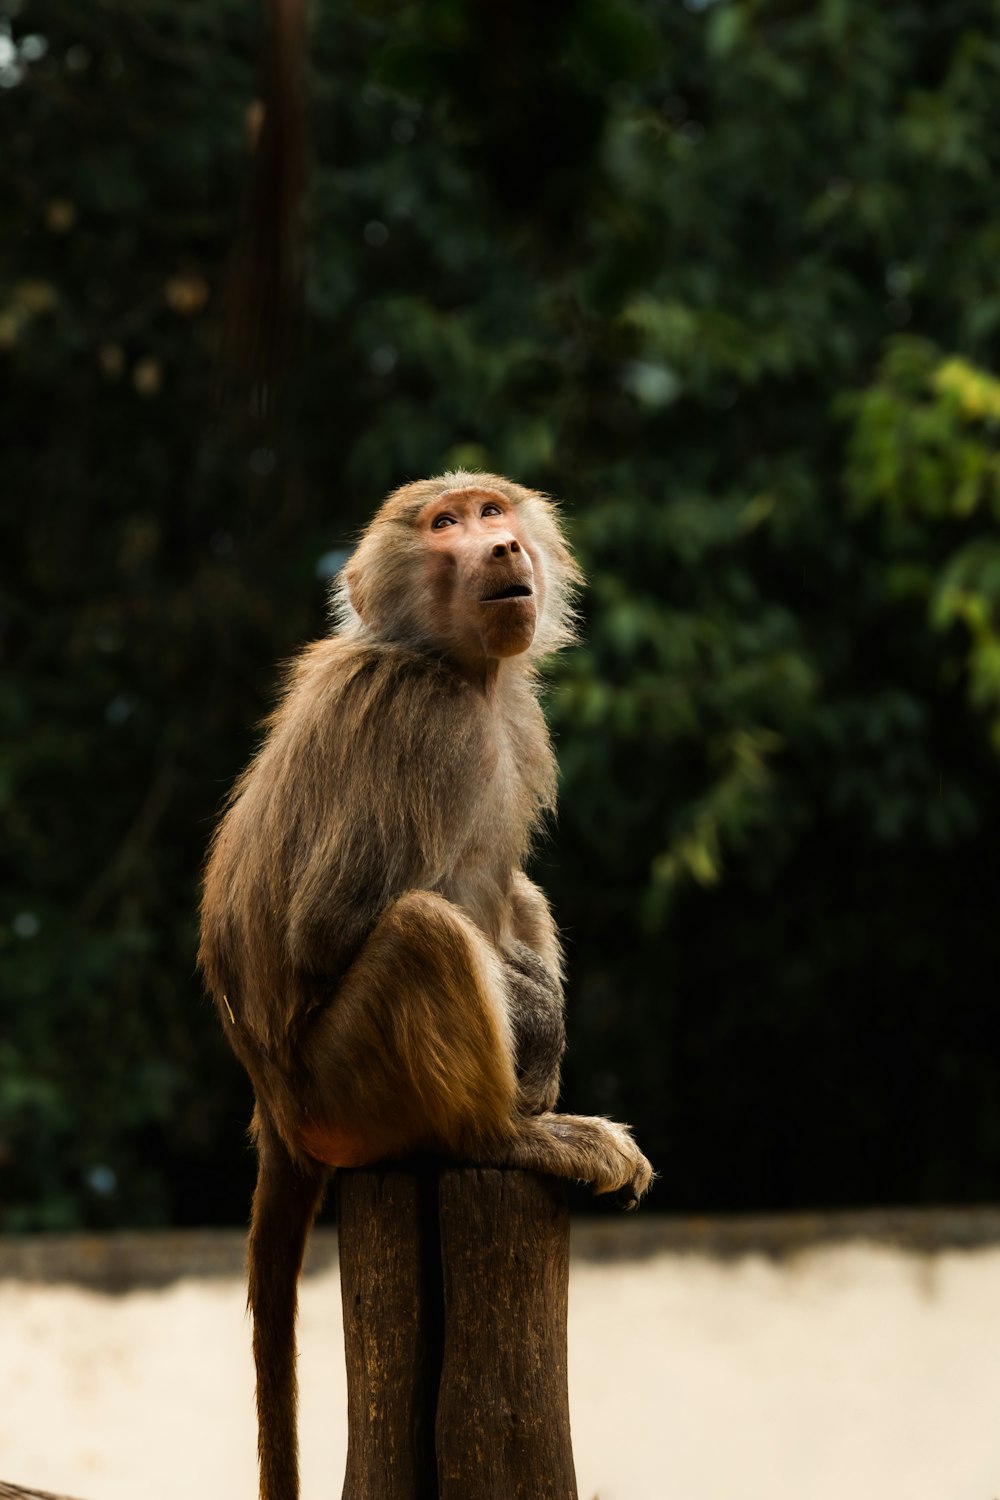 a monkey sitting on a post